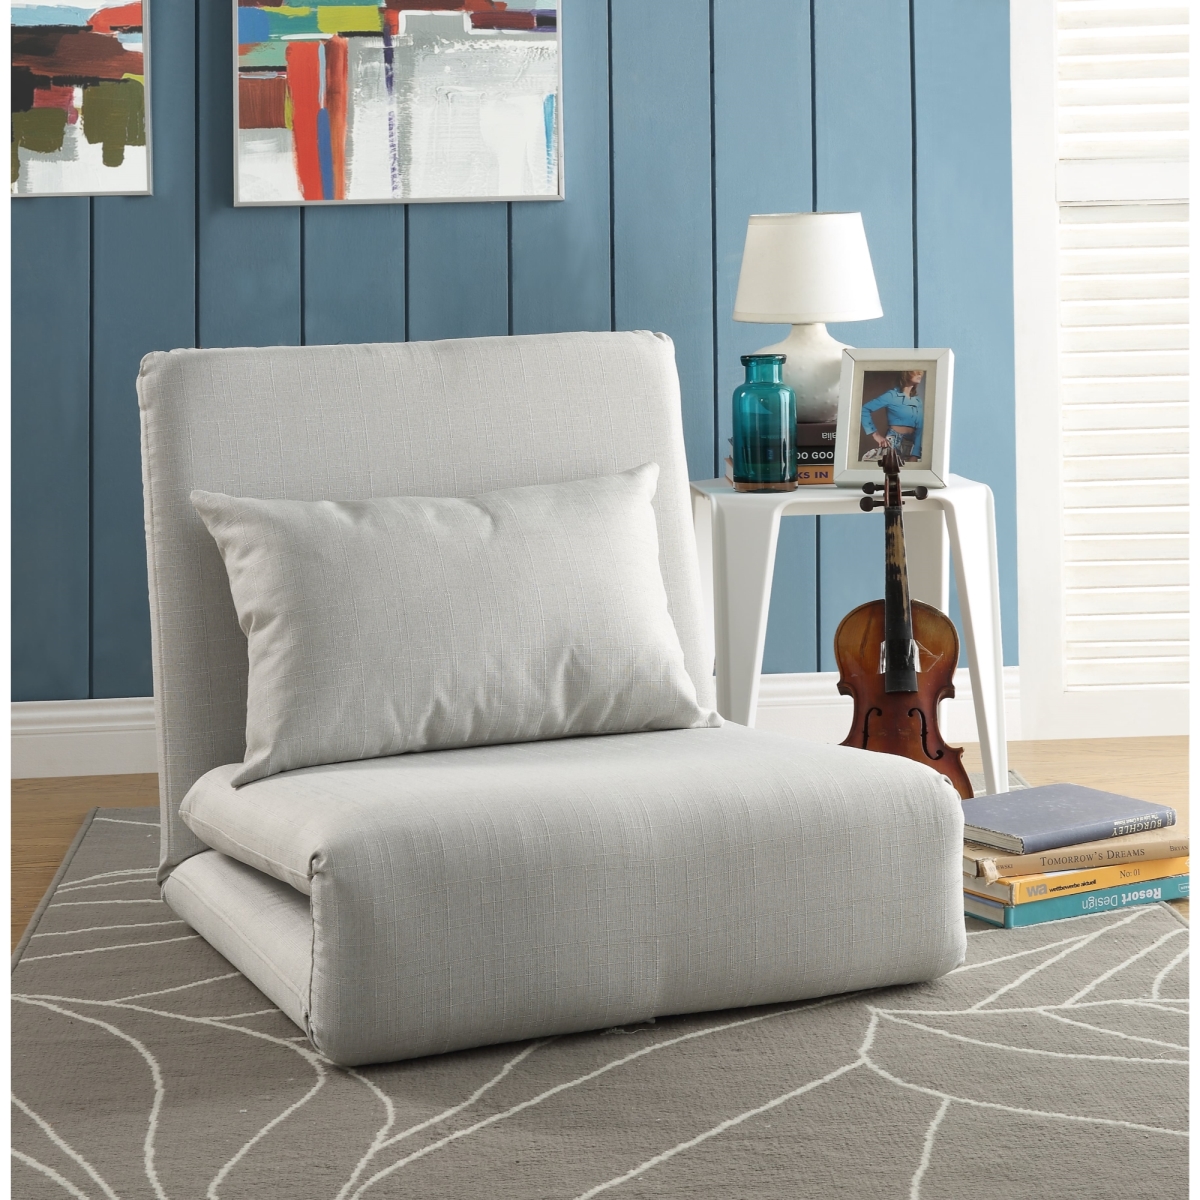 Posh Living Relaxie Linen 5-Position Adjustable Convertible Flip Chair Sleeper Dorm Bed Couch Lounger Sofa - Beige